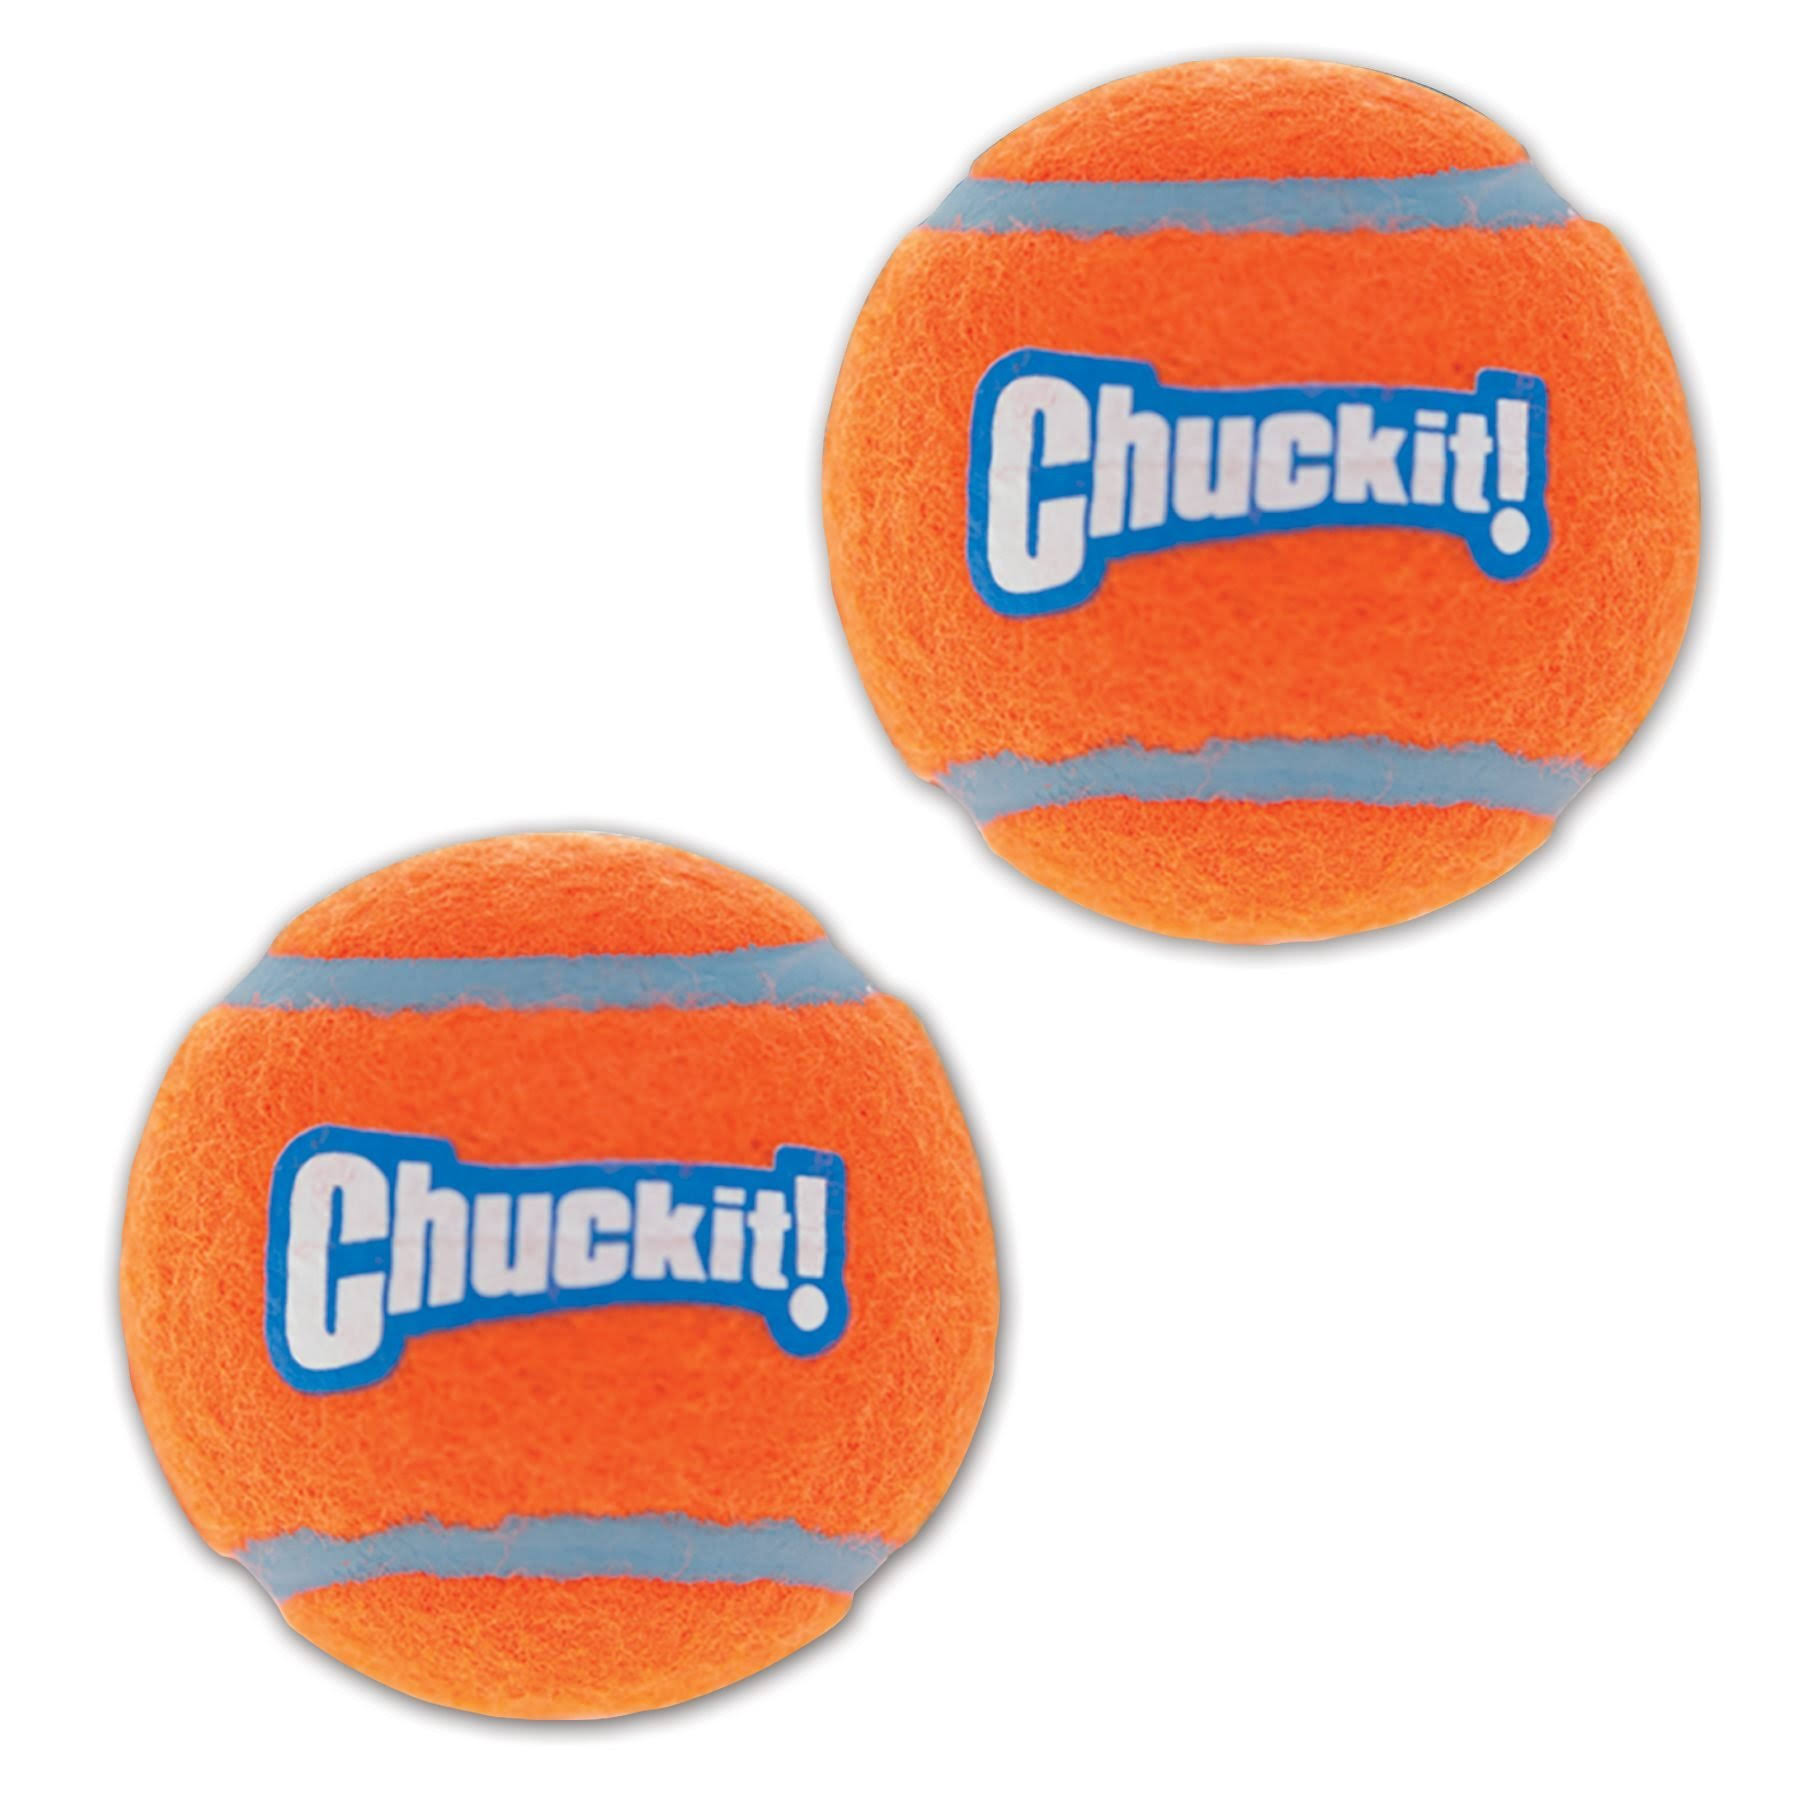 Chuckit! Dog Fetch Tennis Balls